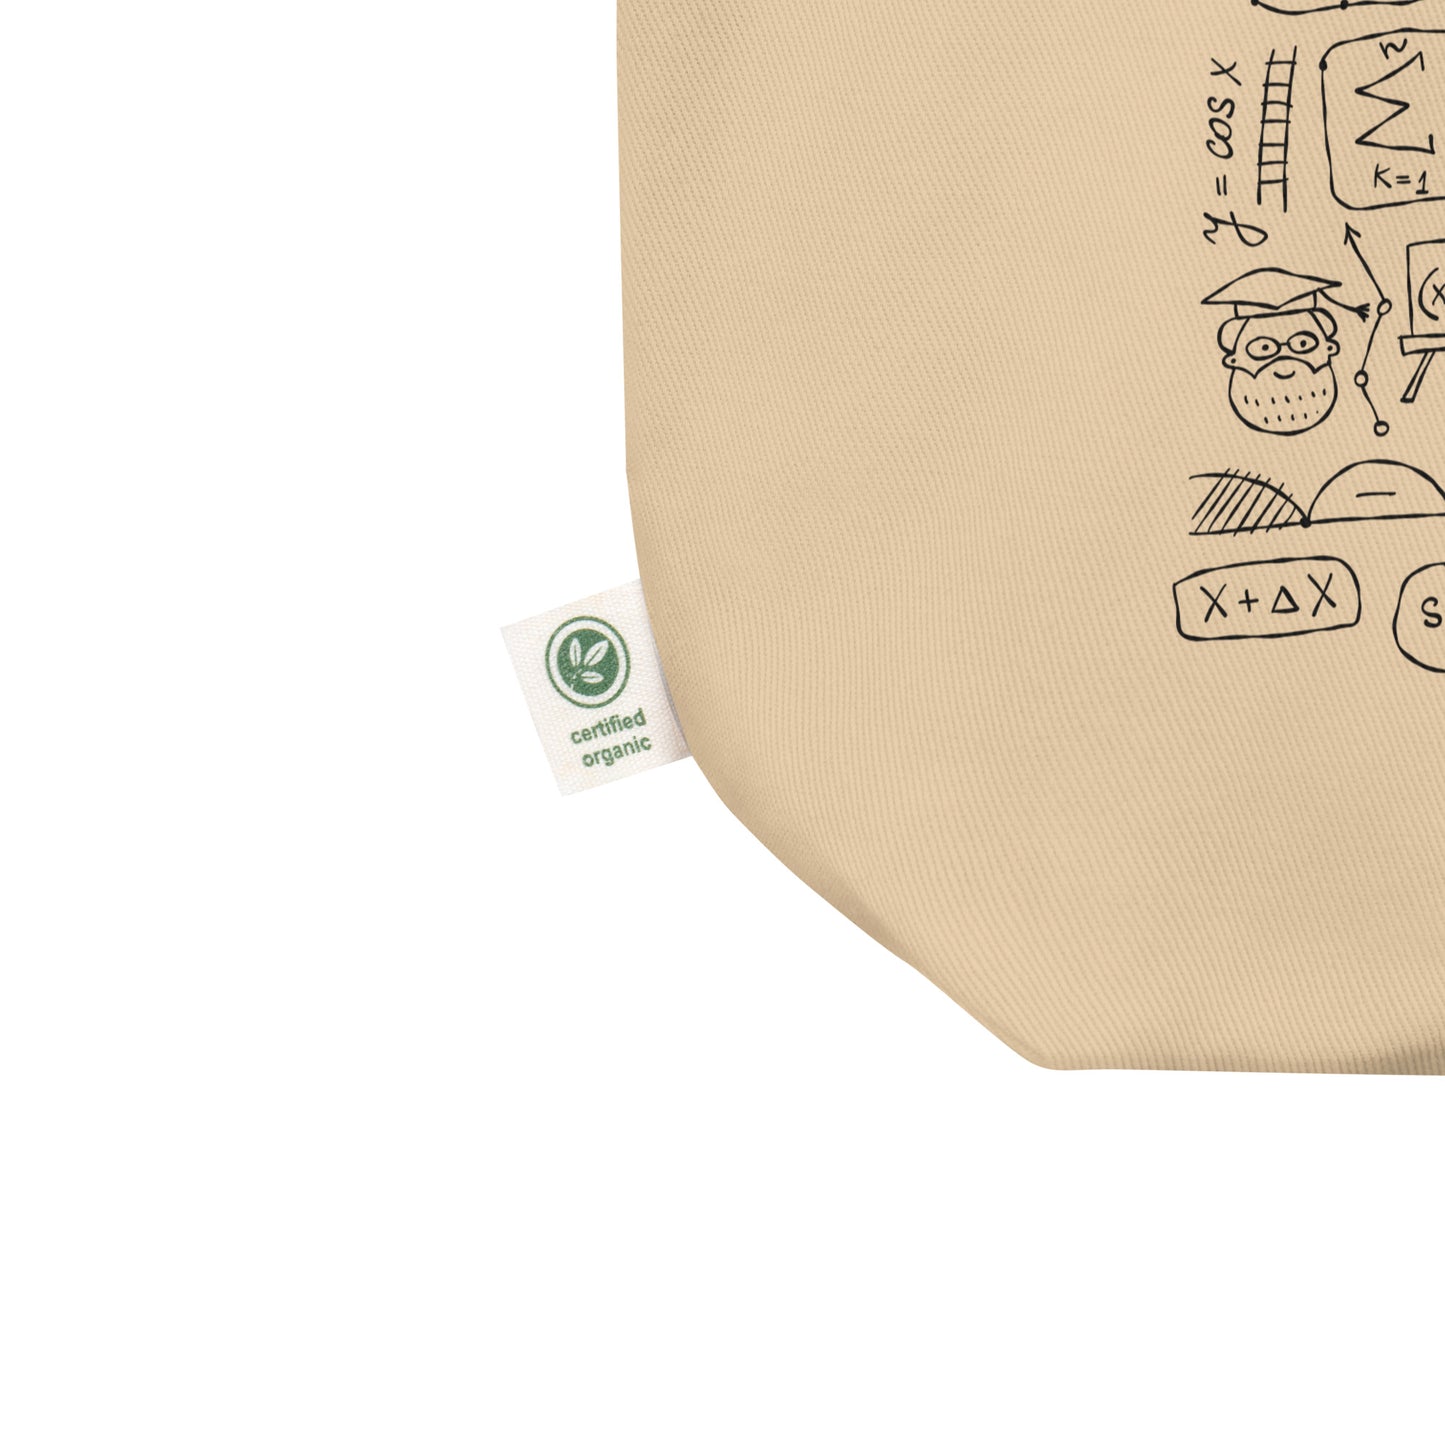 Eco Tote Bag with Math Print Equations and Symbols. Personalised back side kudrylab